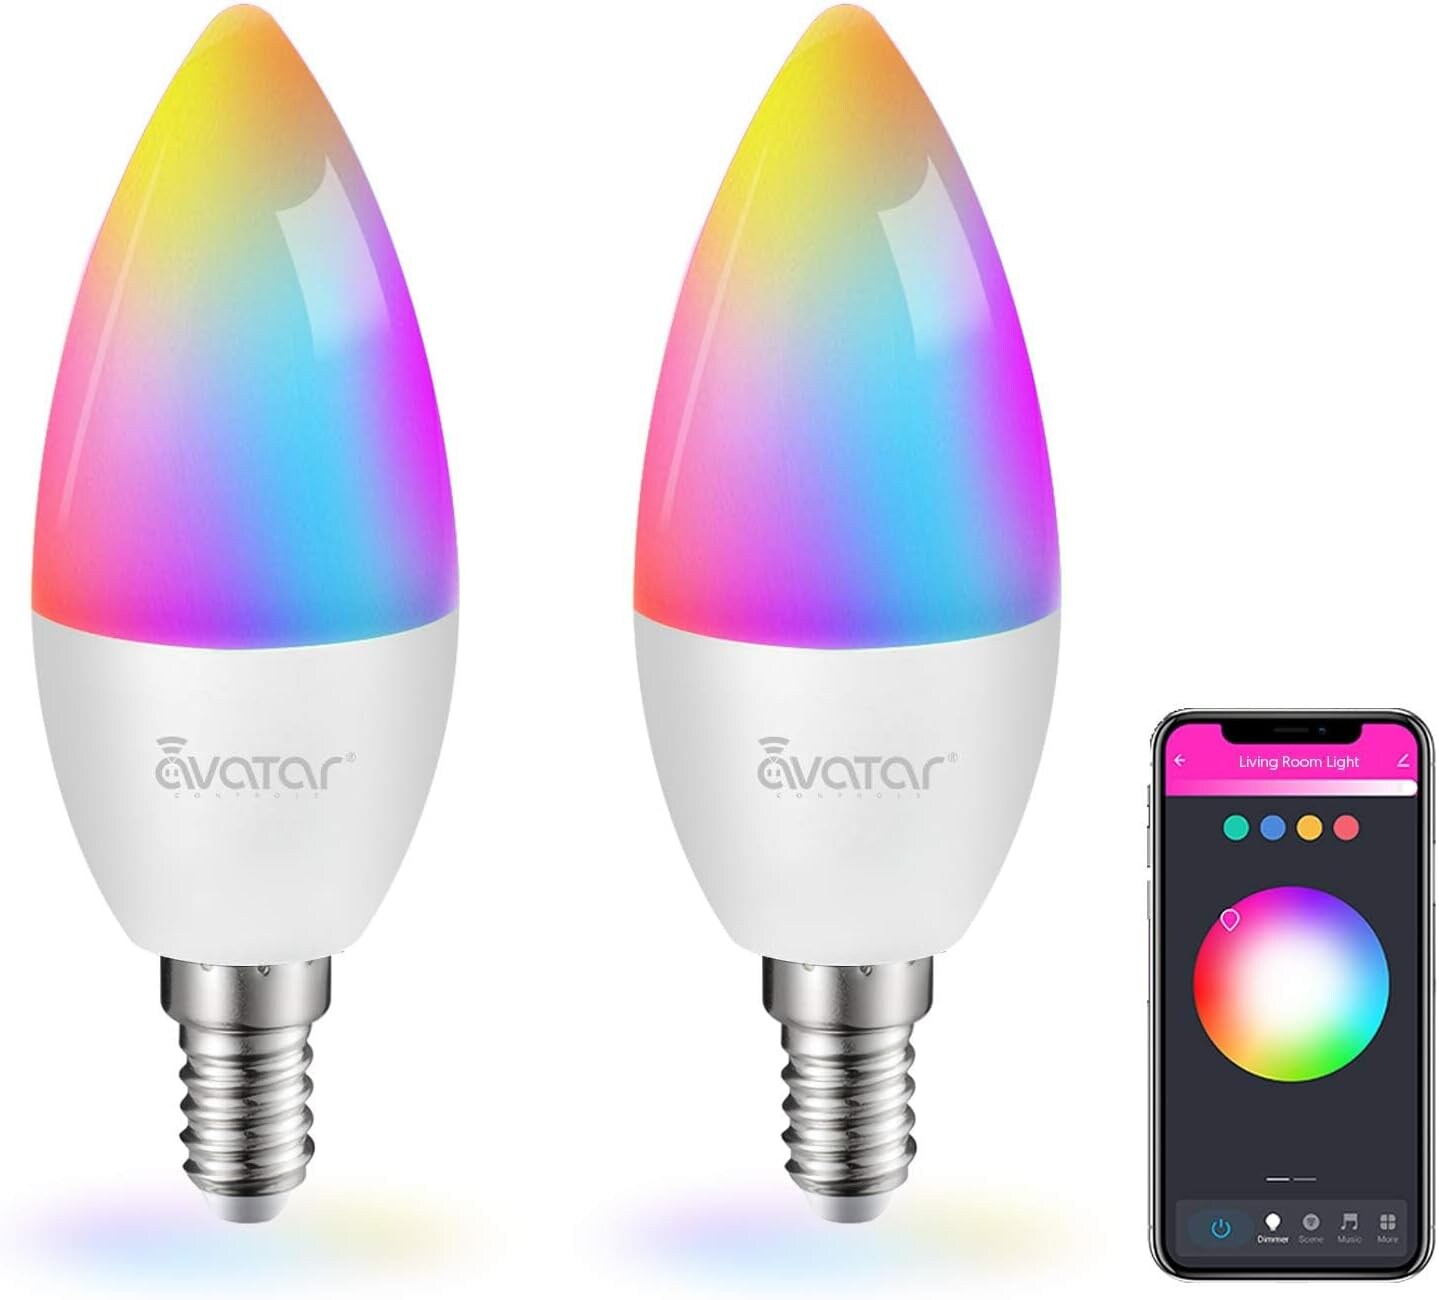 Avatar Controls 80-Watt Equivalent BR30 Dimmable RGBW Smart LED Light Bulb ALB201W